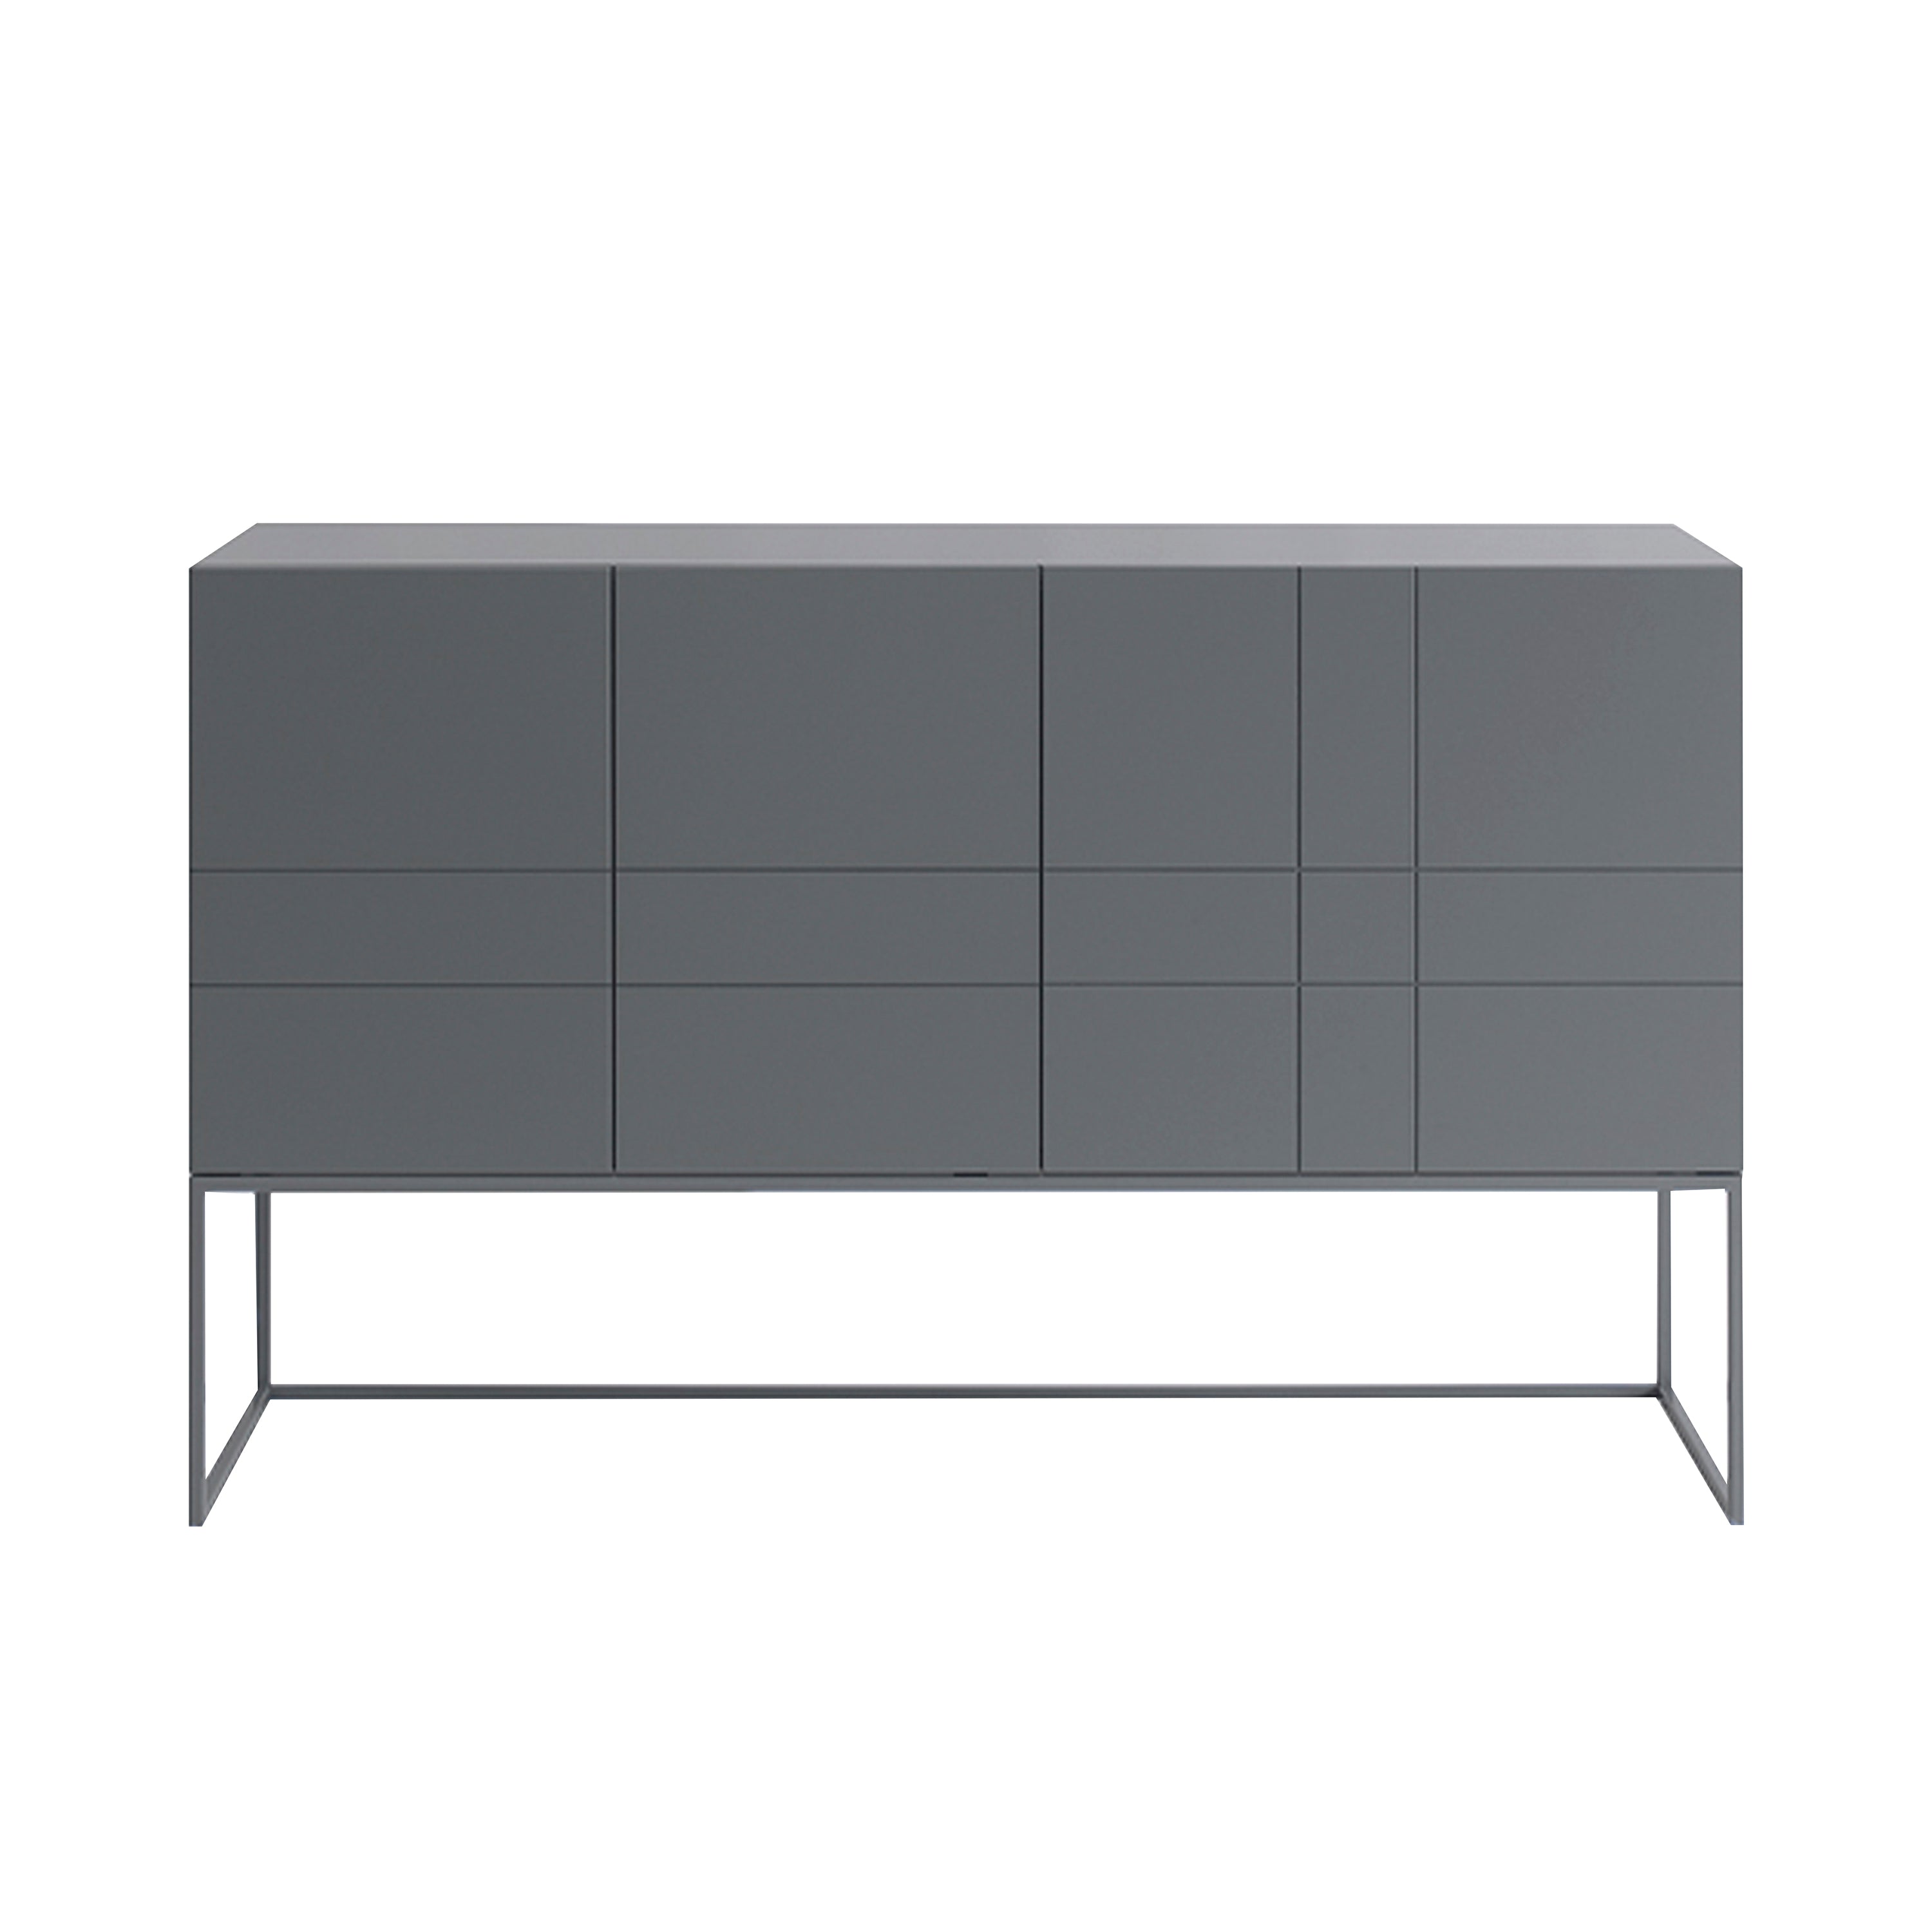 Kilt Light 137 Cabinet with Drawers: Strom Grey